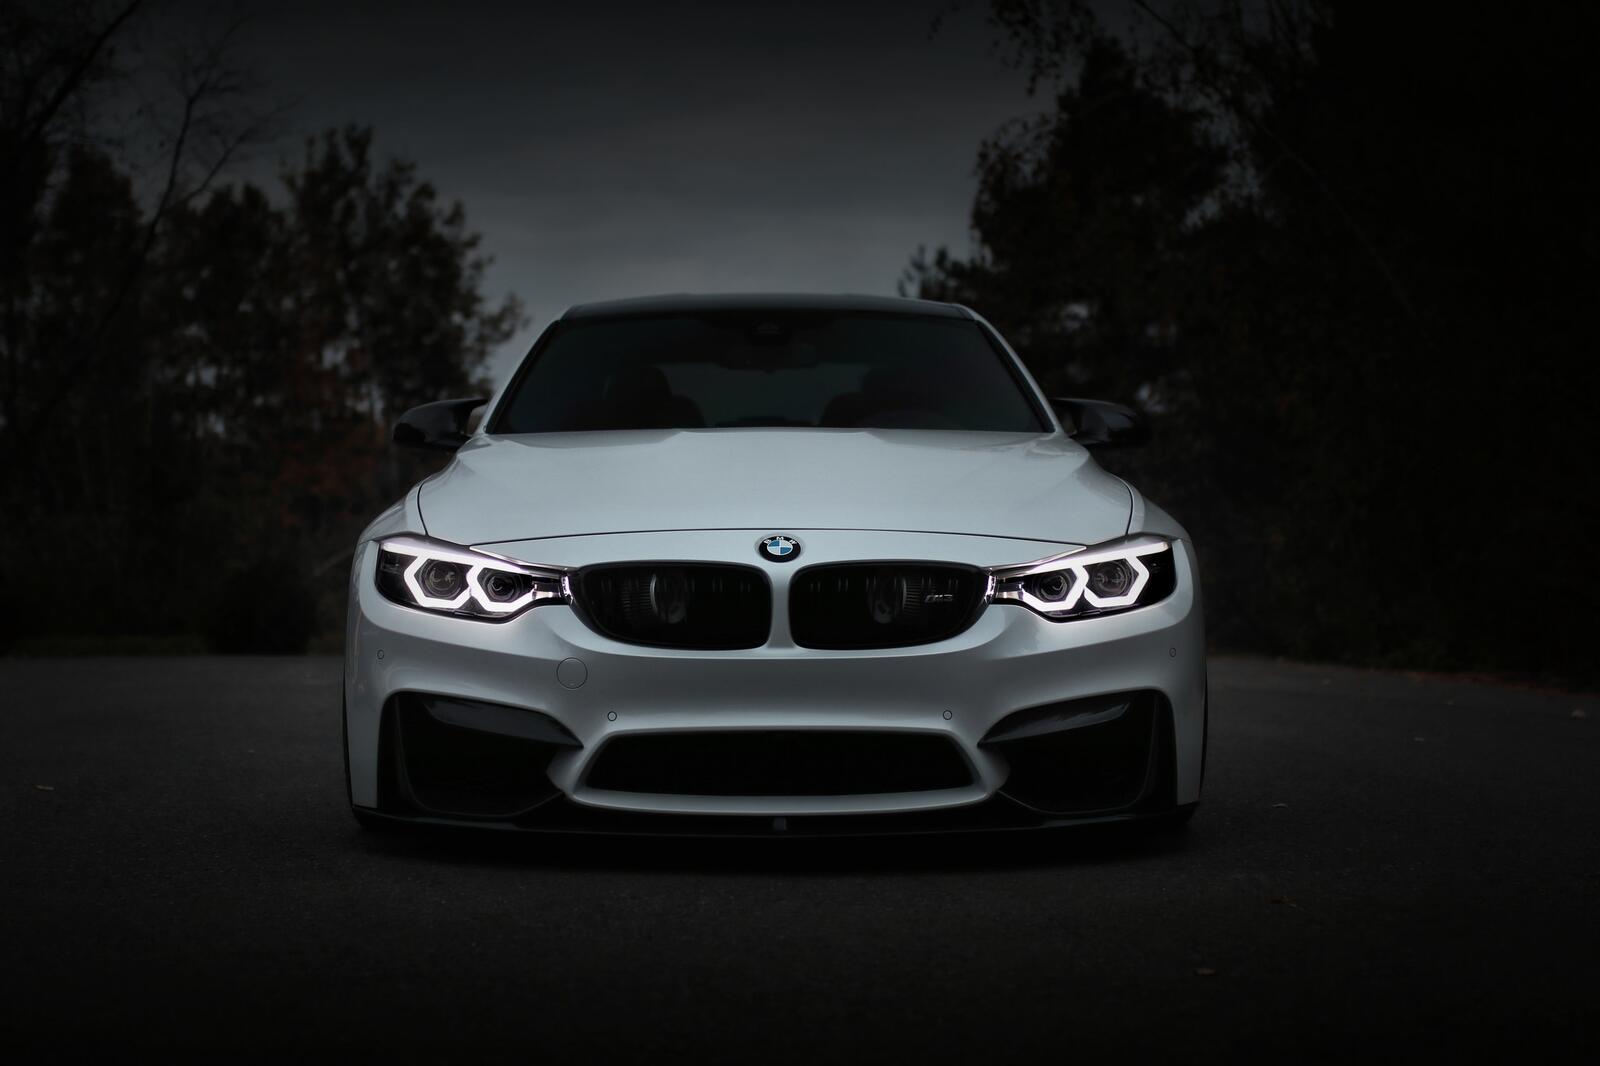 Free photo White BMW M3 on the lights on a dark night